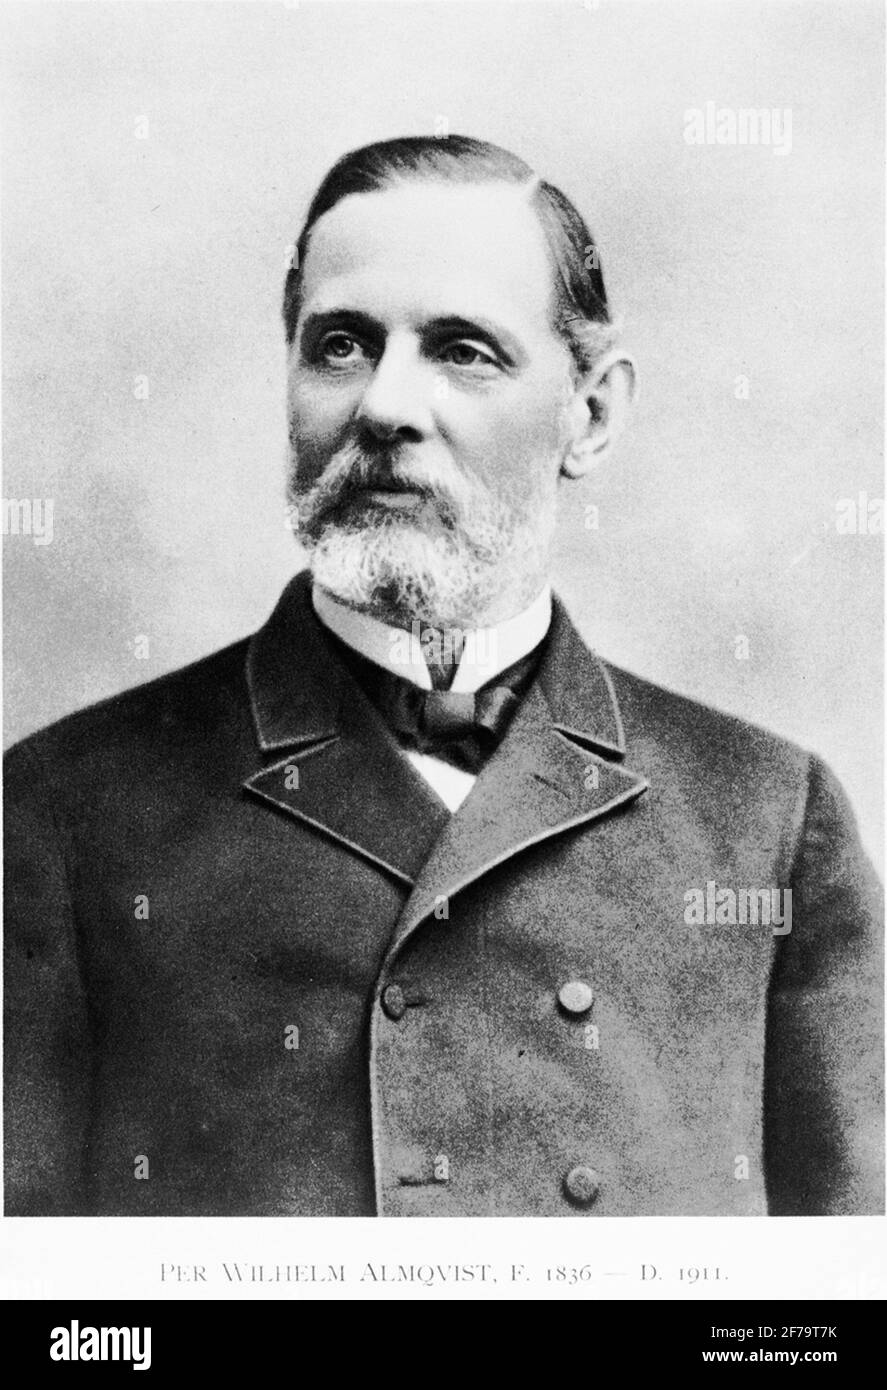 Portrait of Per Wilhelm Almqvist. Stock Photo